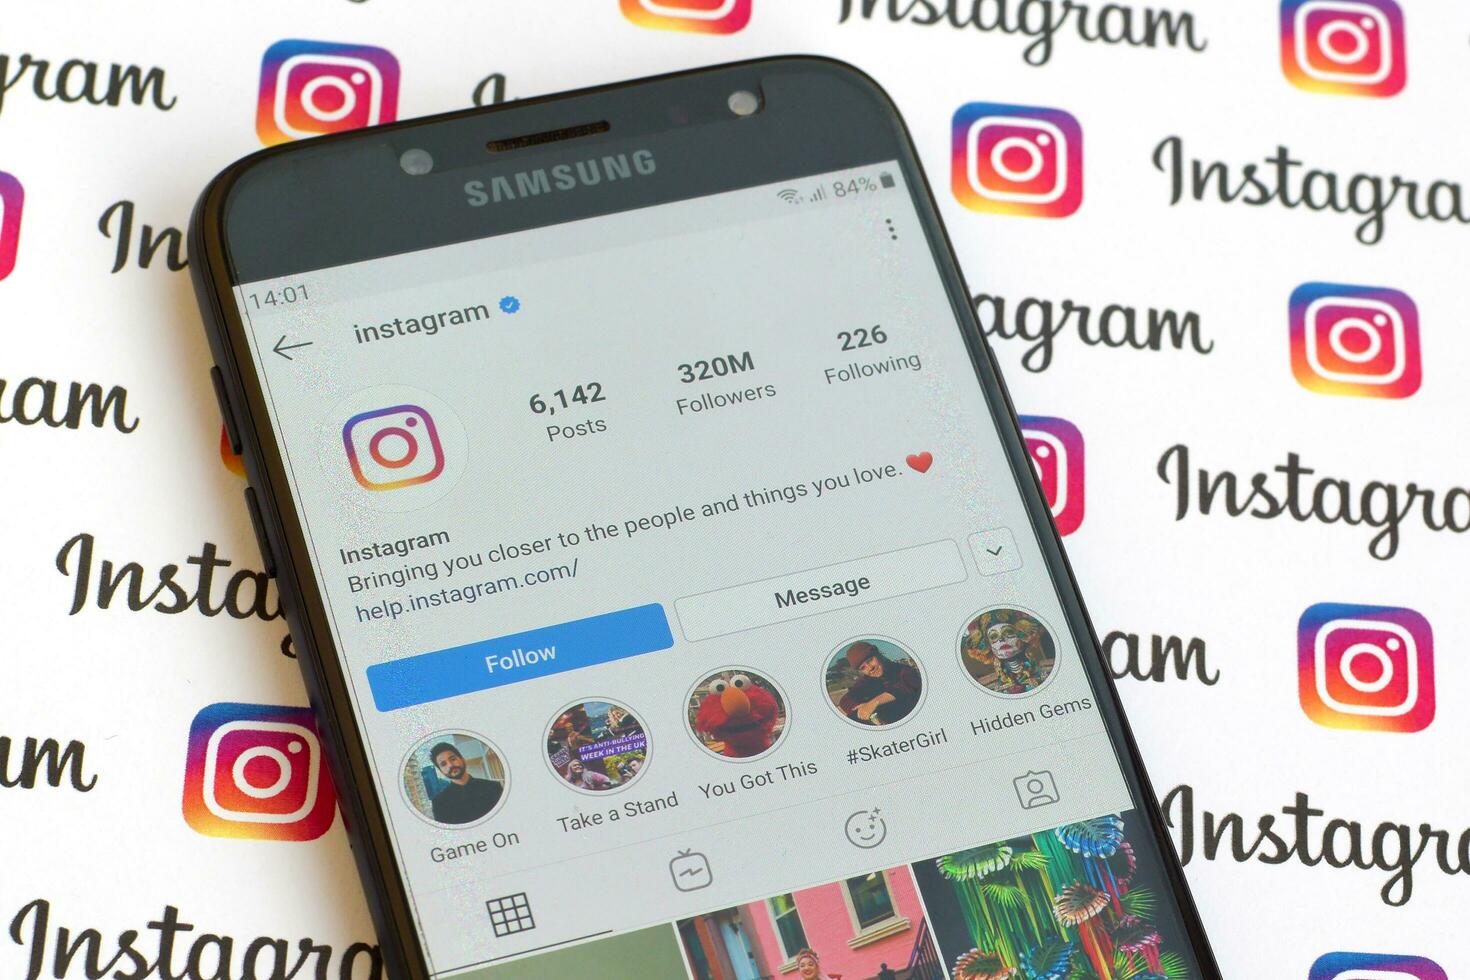 principale ufficiale instagram account su smartphone schermo su carta instagram striscione. foto